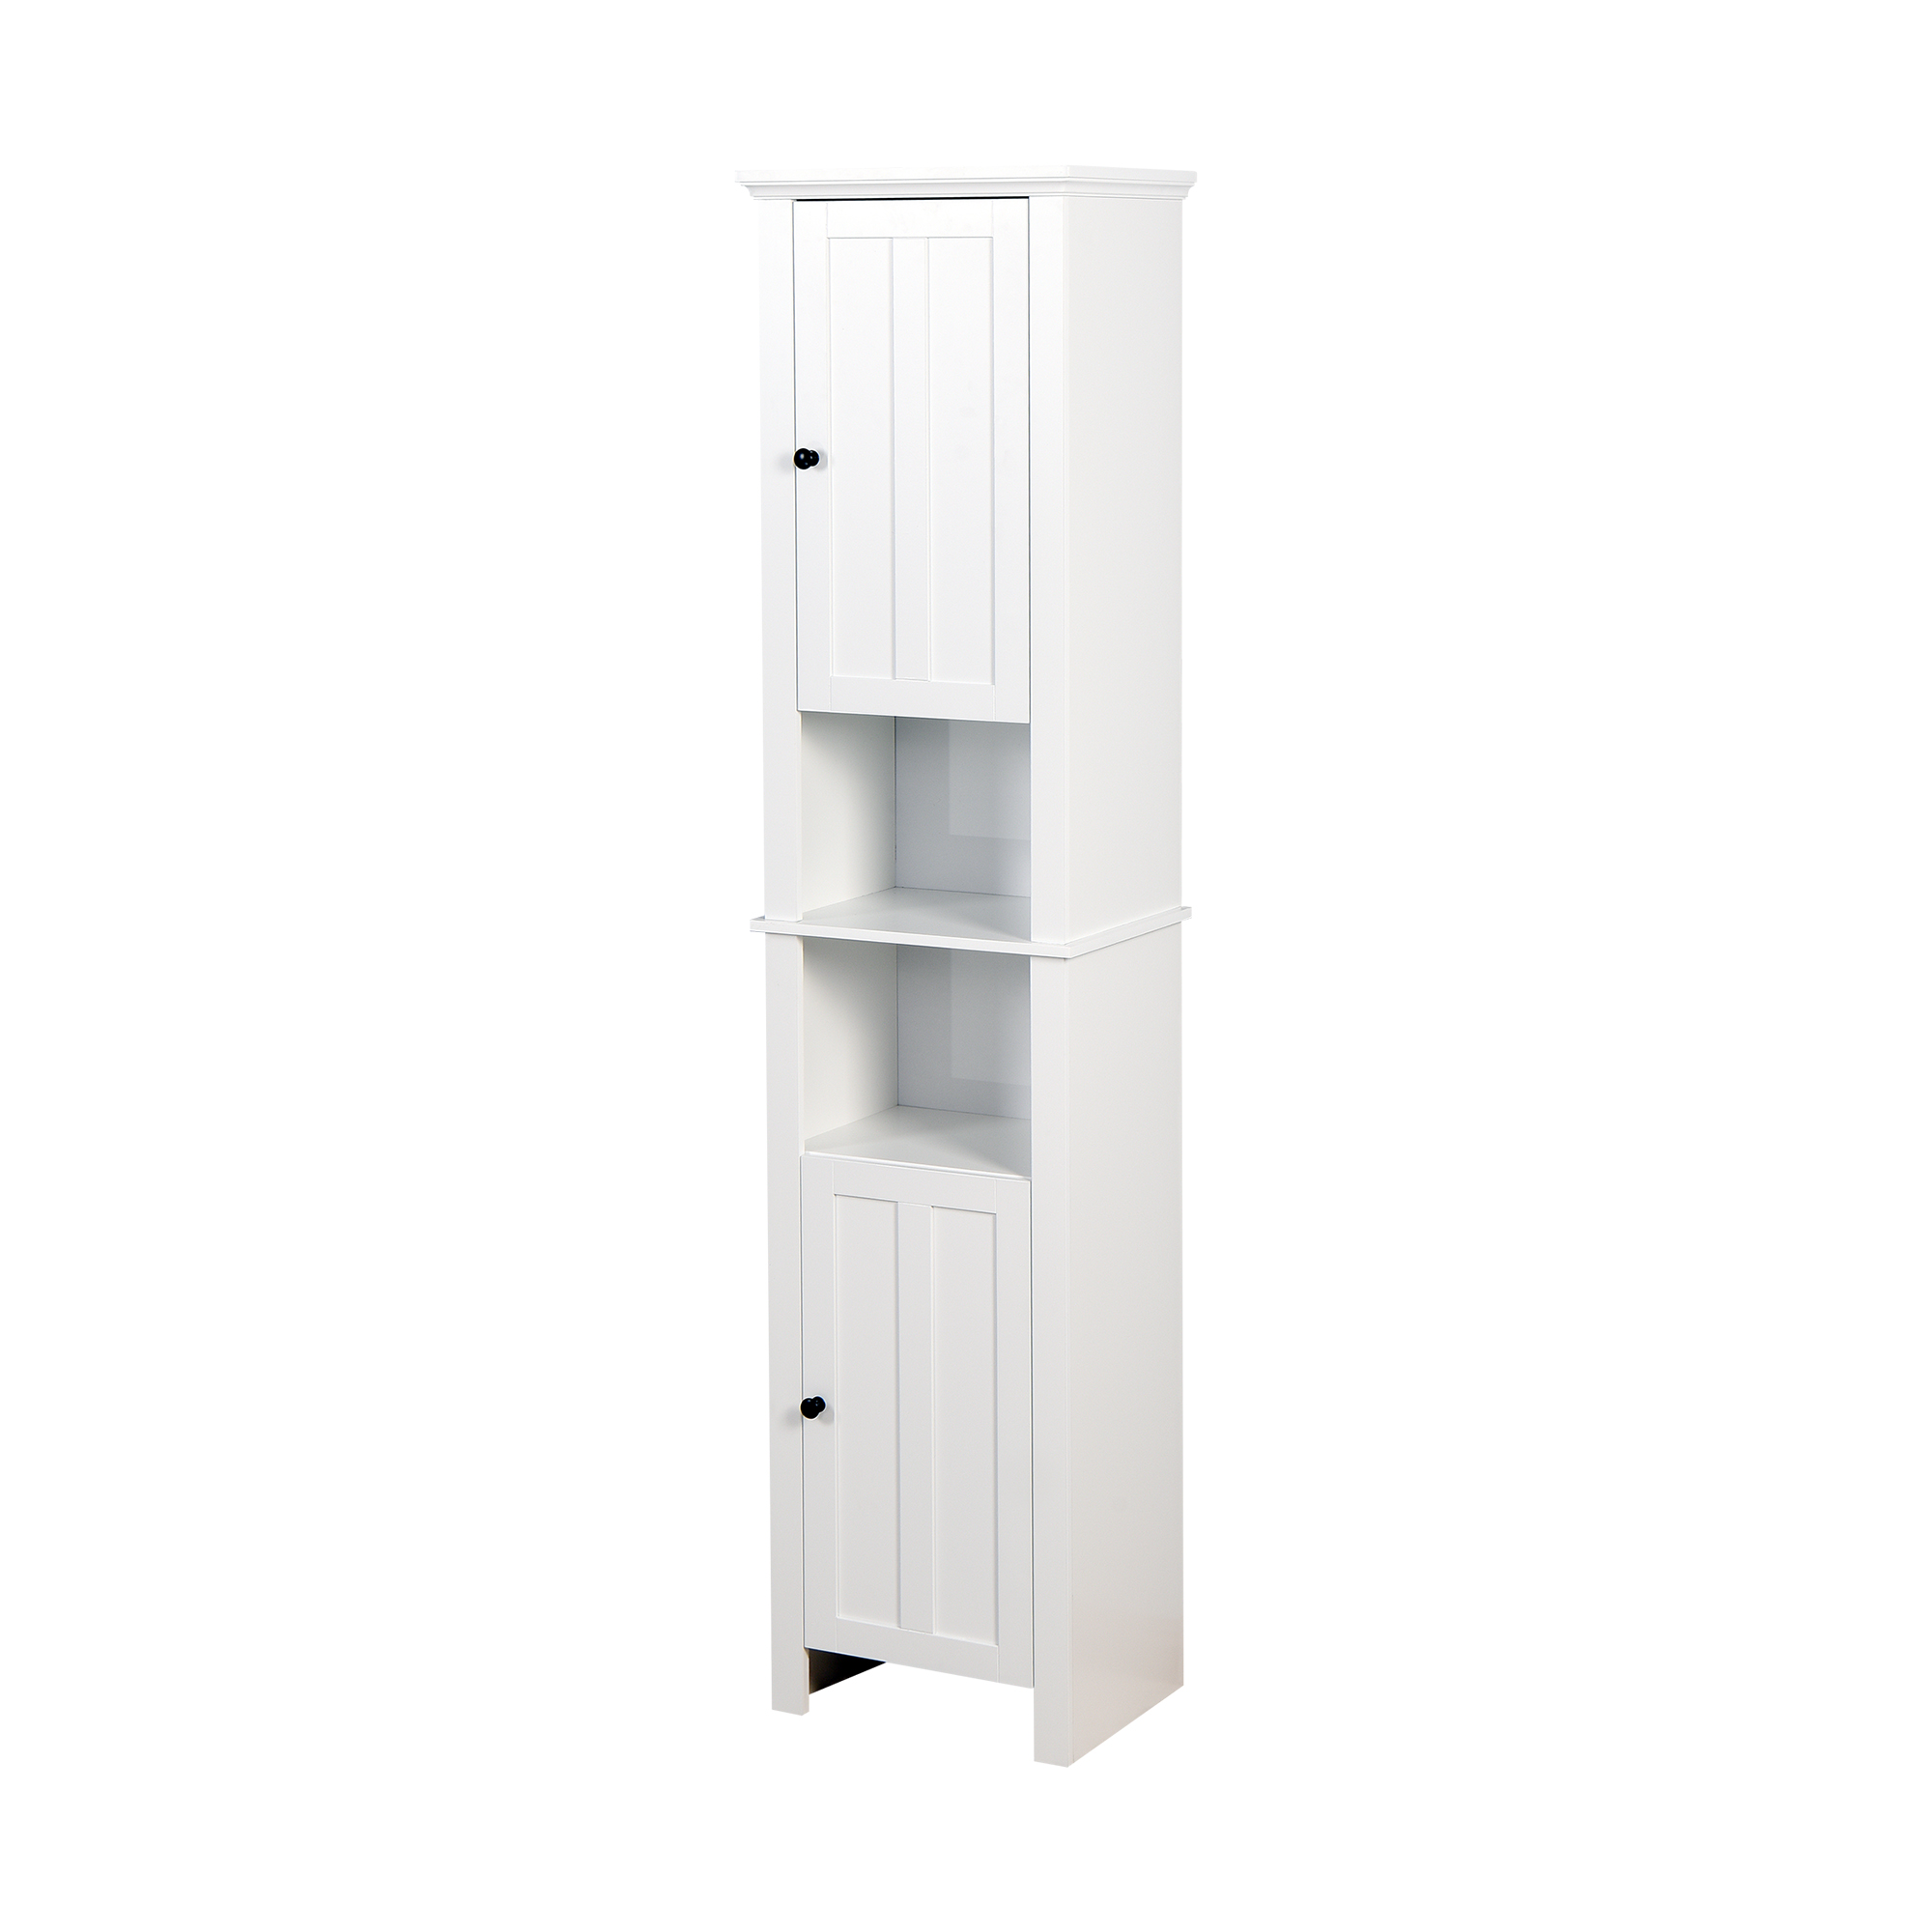 Bathroom Floor Storage Cabinet with 2 Doors Living Room Wooden Cabinet with 6 Shelves 15.75 x 11.81 x 66.93 inch-Boyel Living